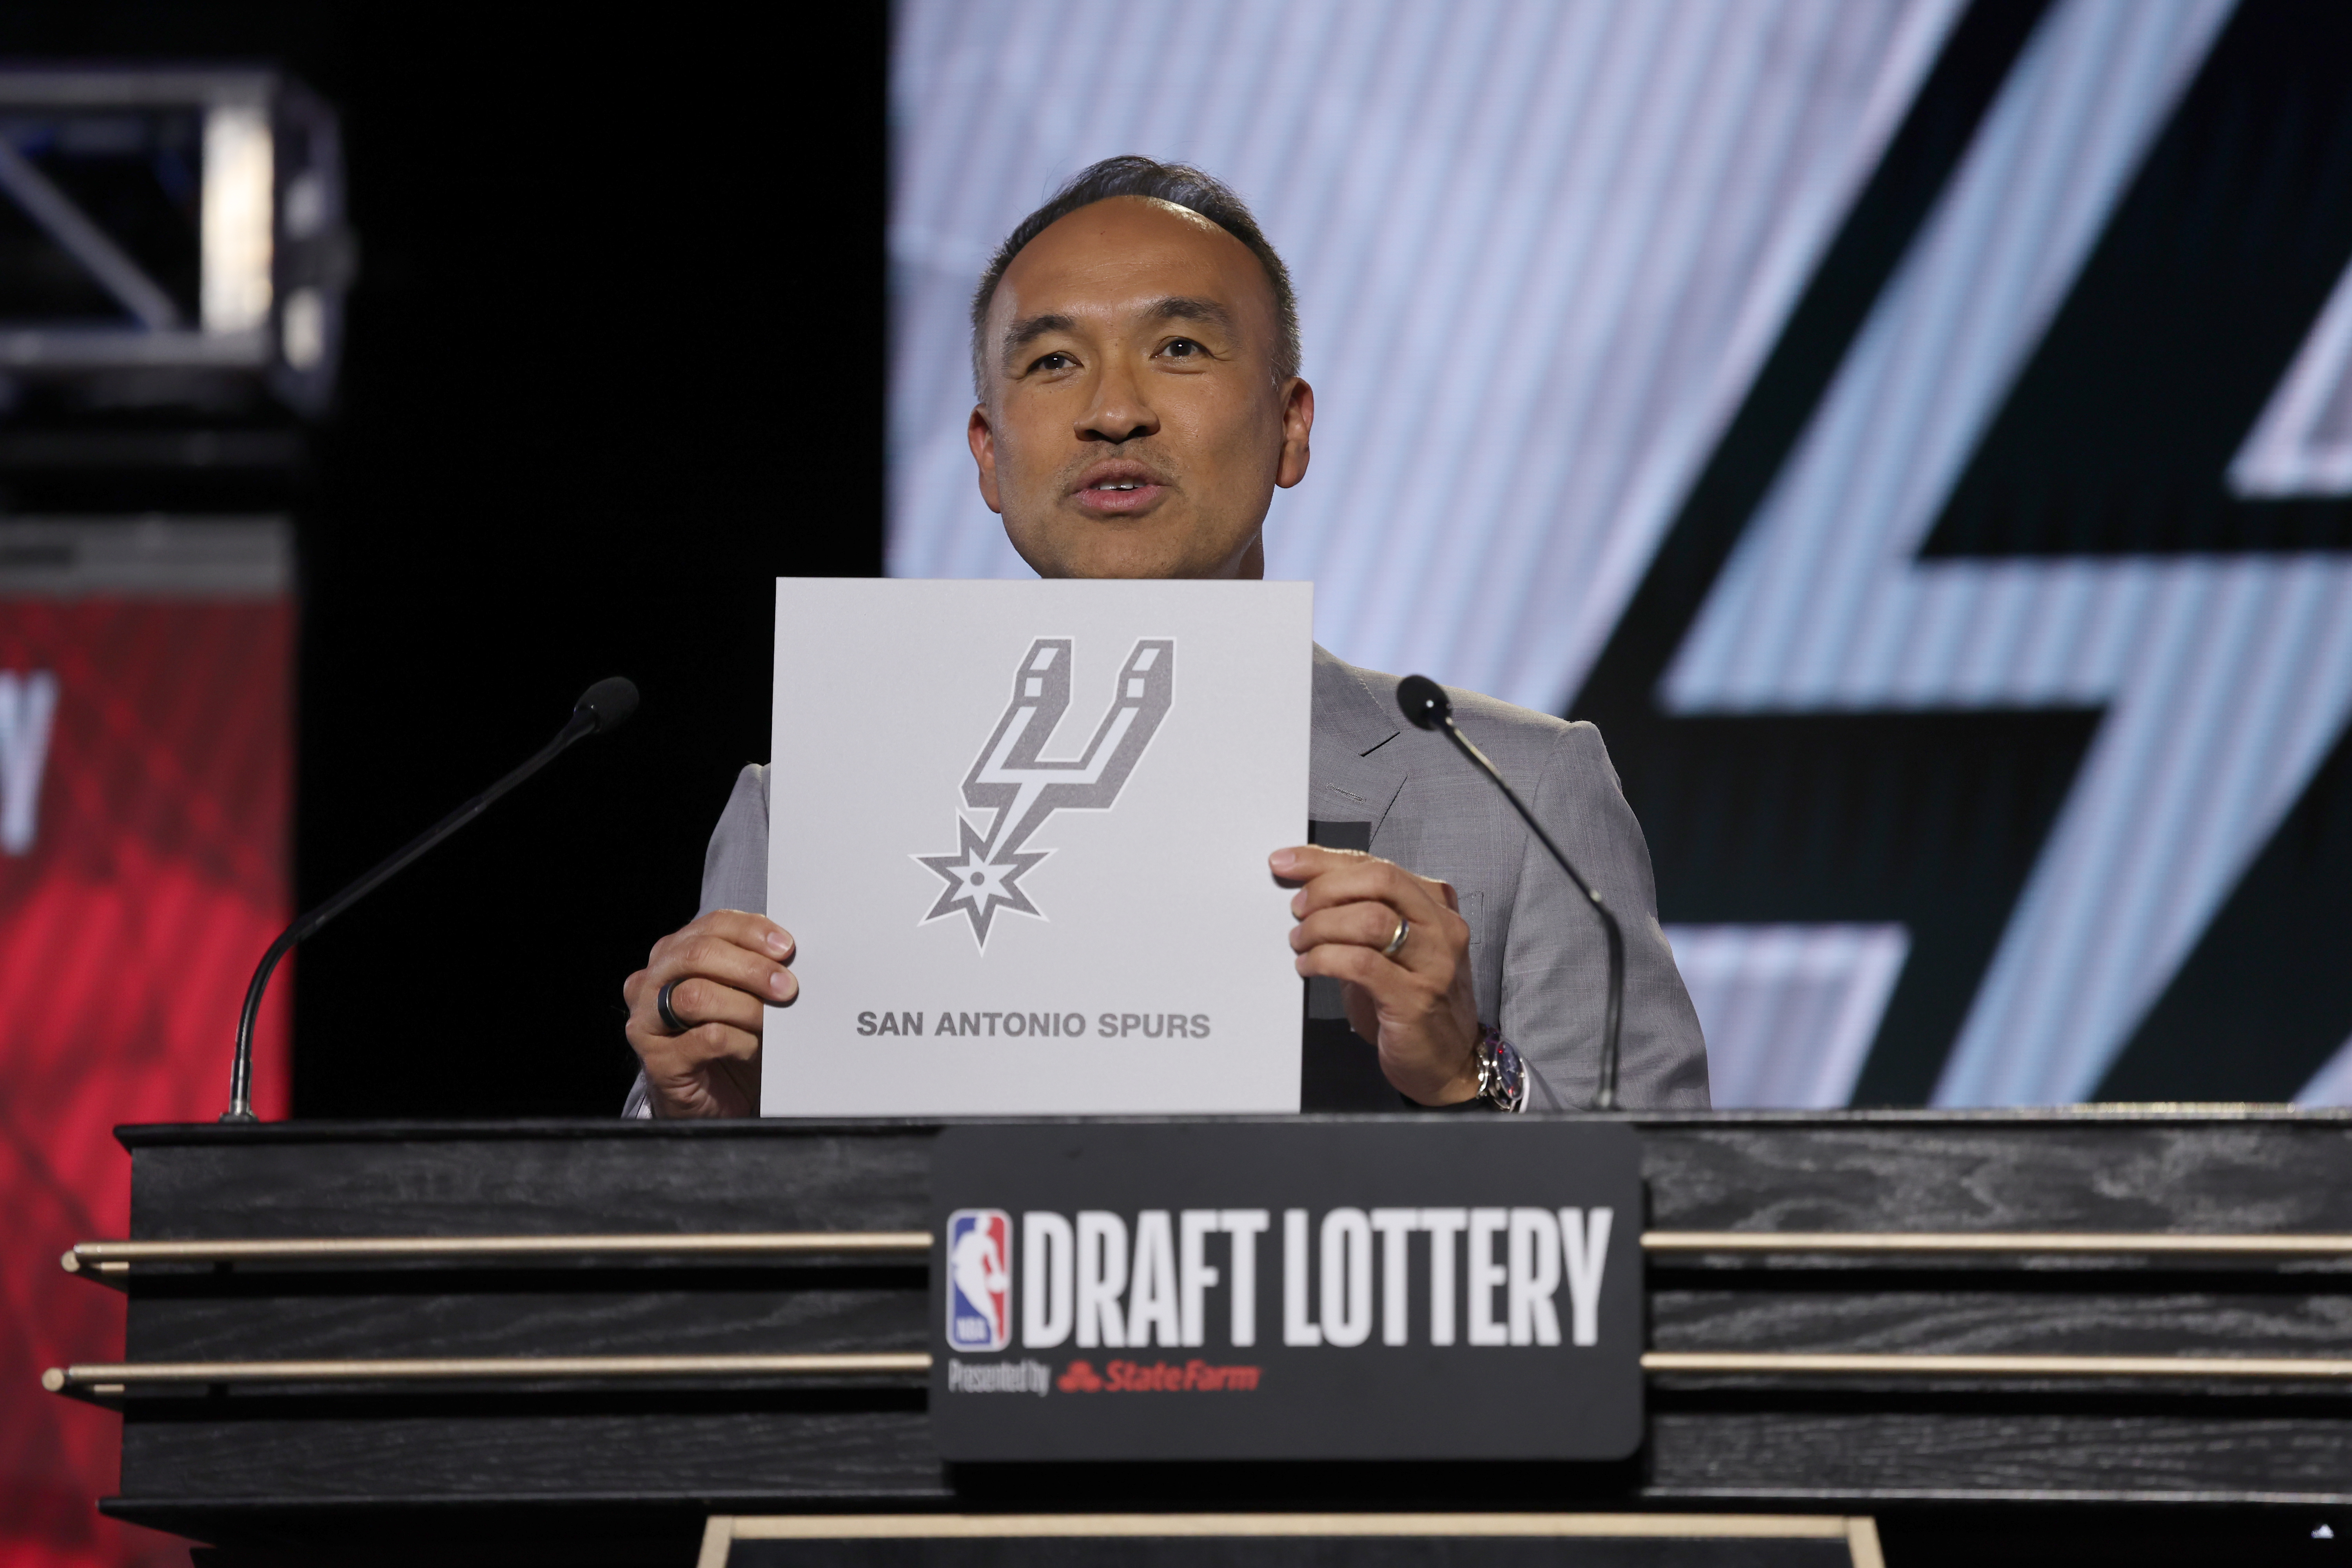 2022 NBA Draft Lottery